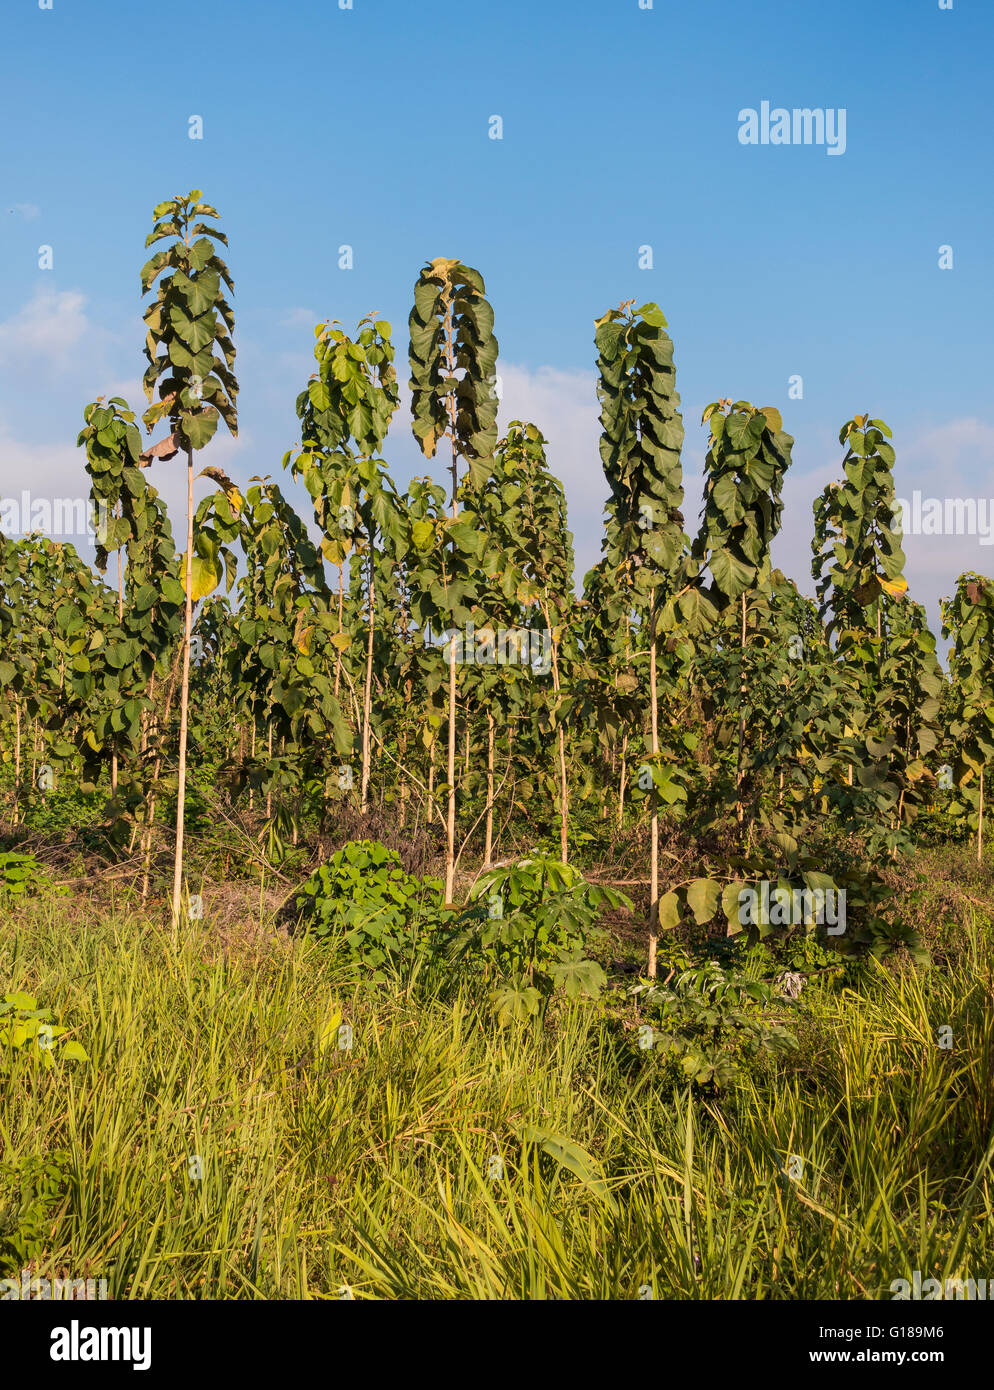 Die Halbinsel OSA, COSTA RICA - zwei Jahre alten Teakbäume auf nachhaltige Teak Plantage. Tectona grandis Stockfoto